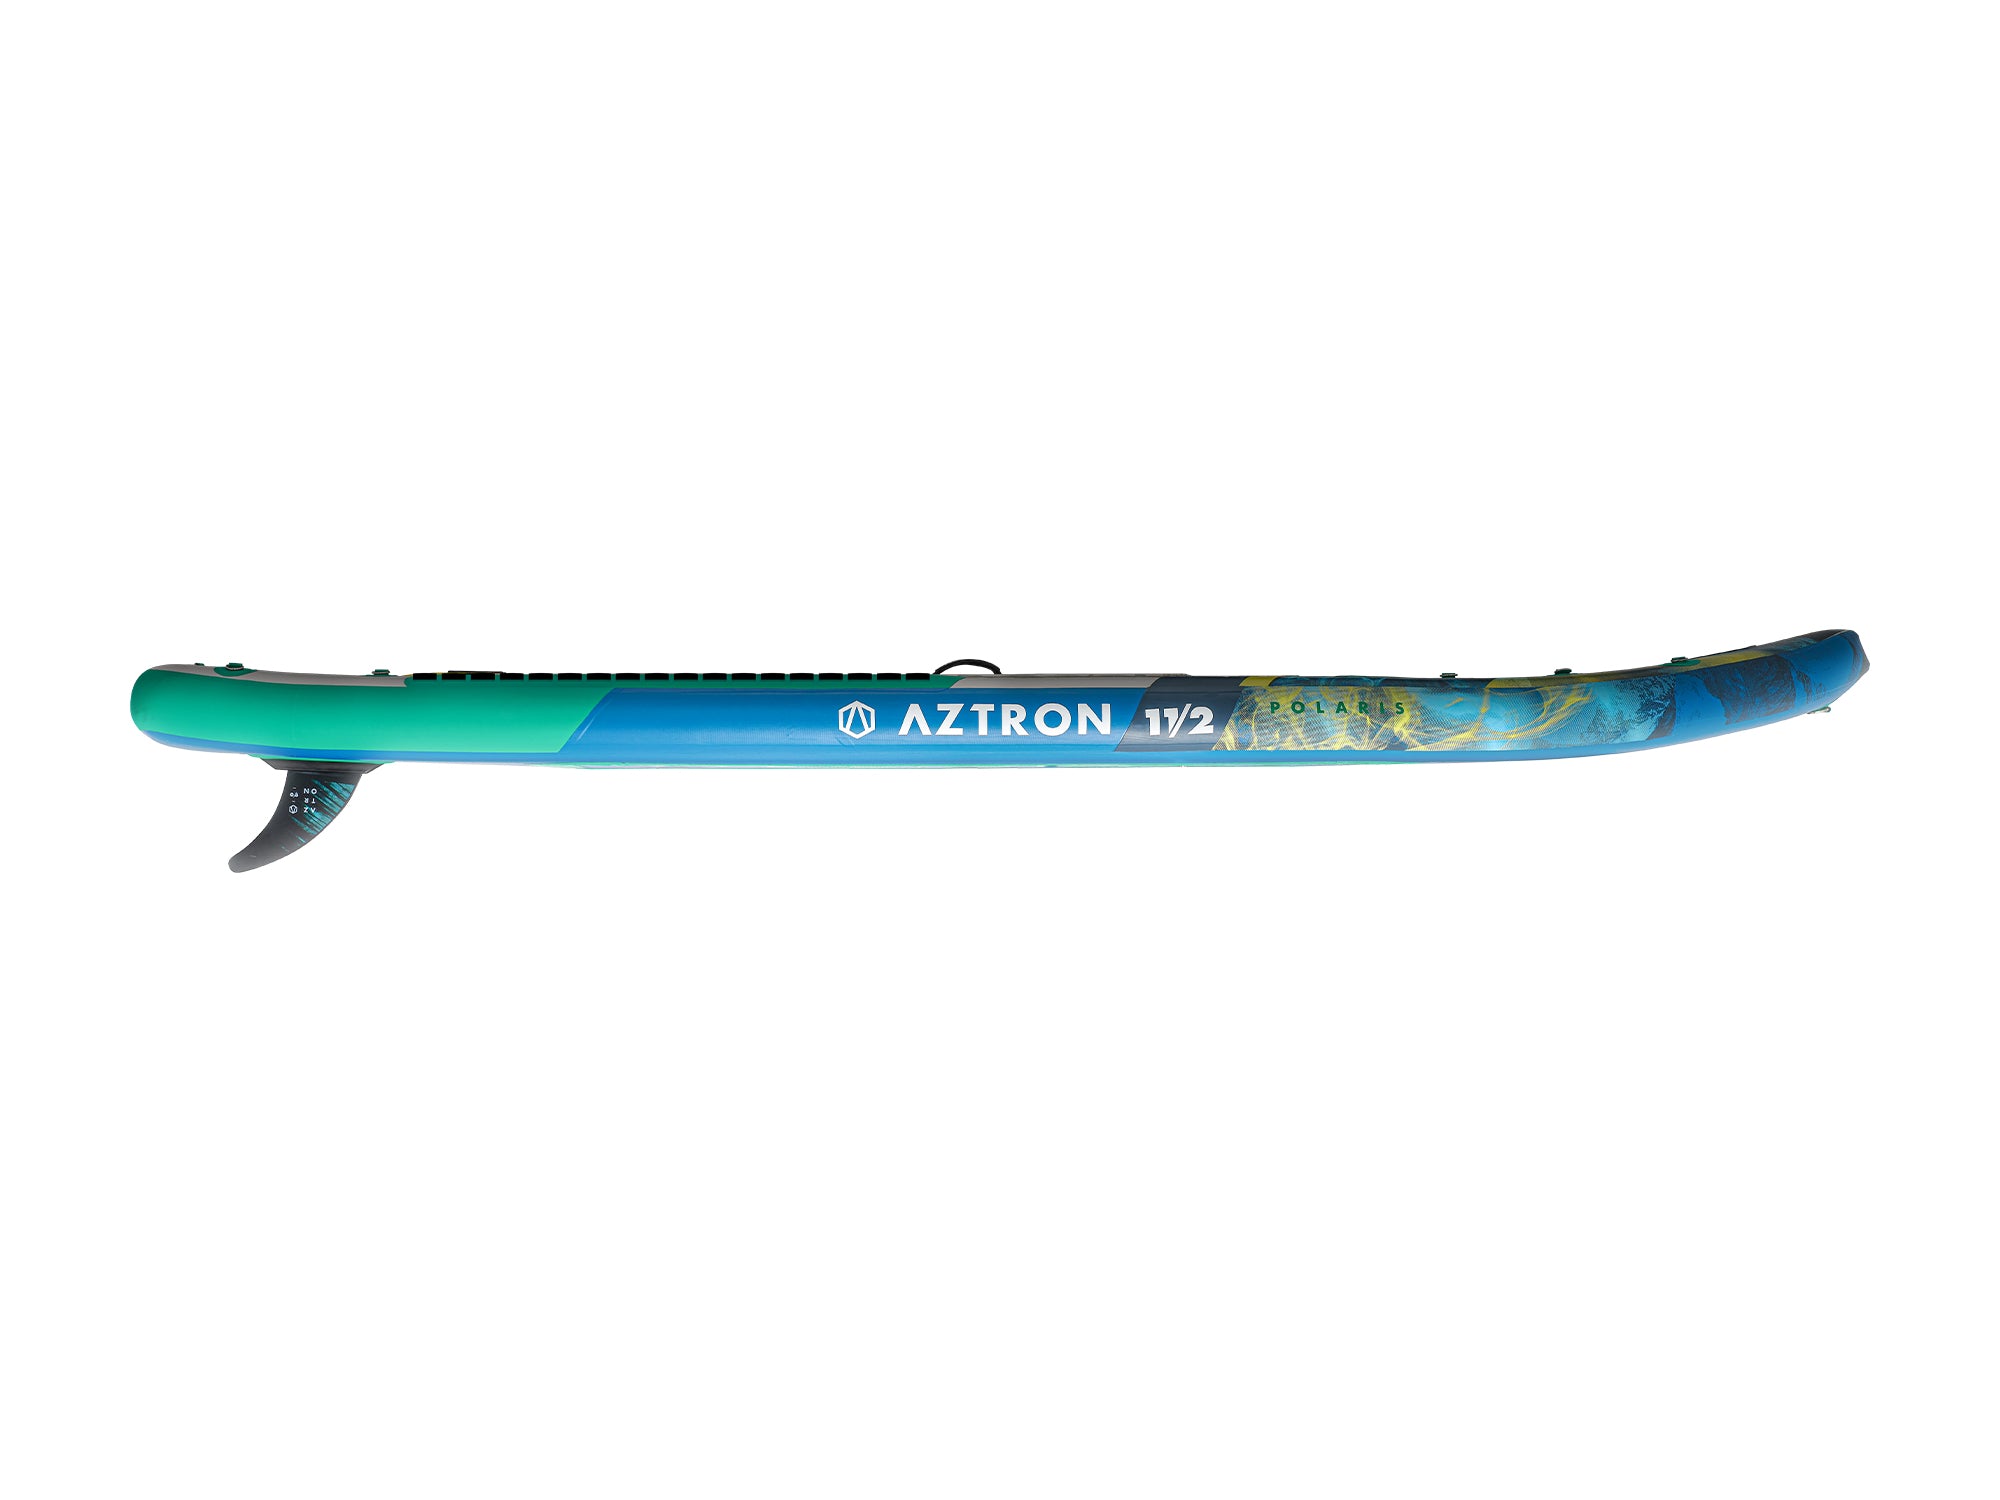 AZTRON POLARIS Set iSUP Avventura/Pesca 11'4", 340x91x15 cm, volume 340 L